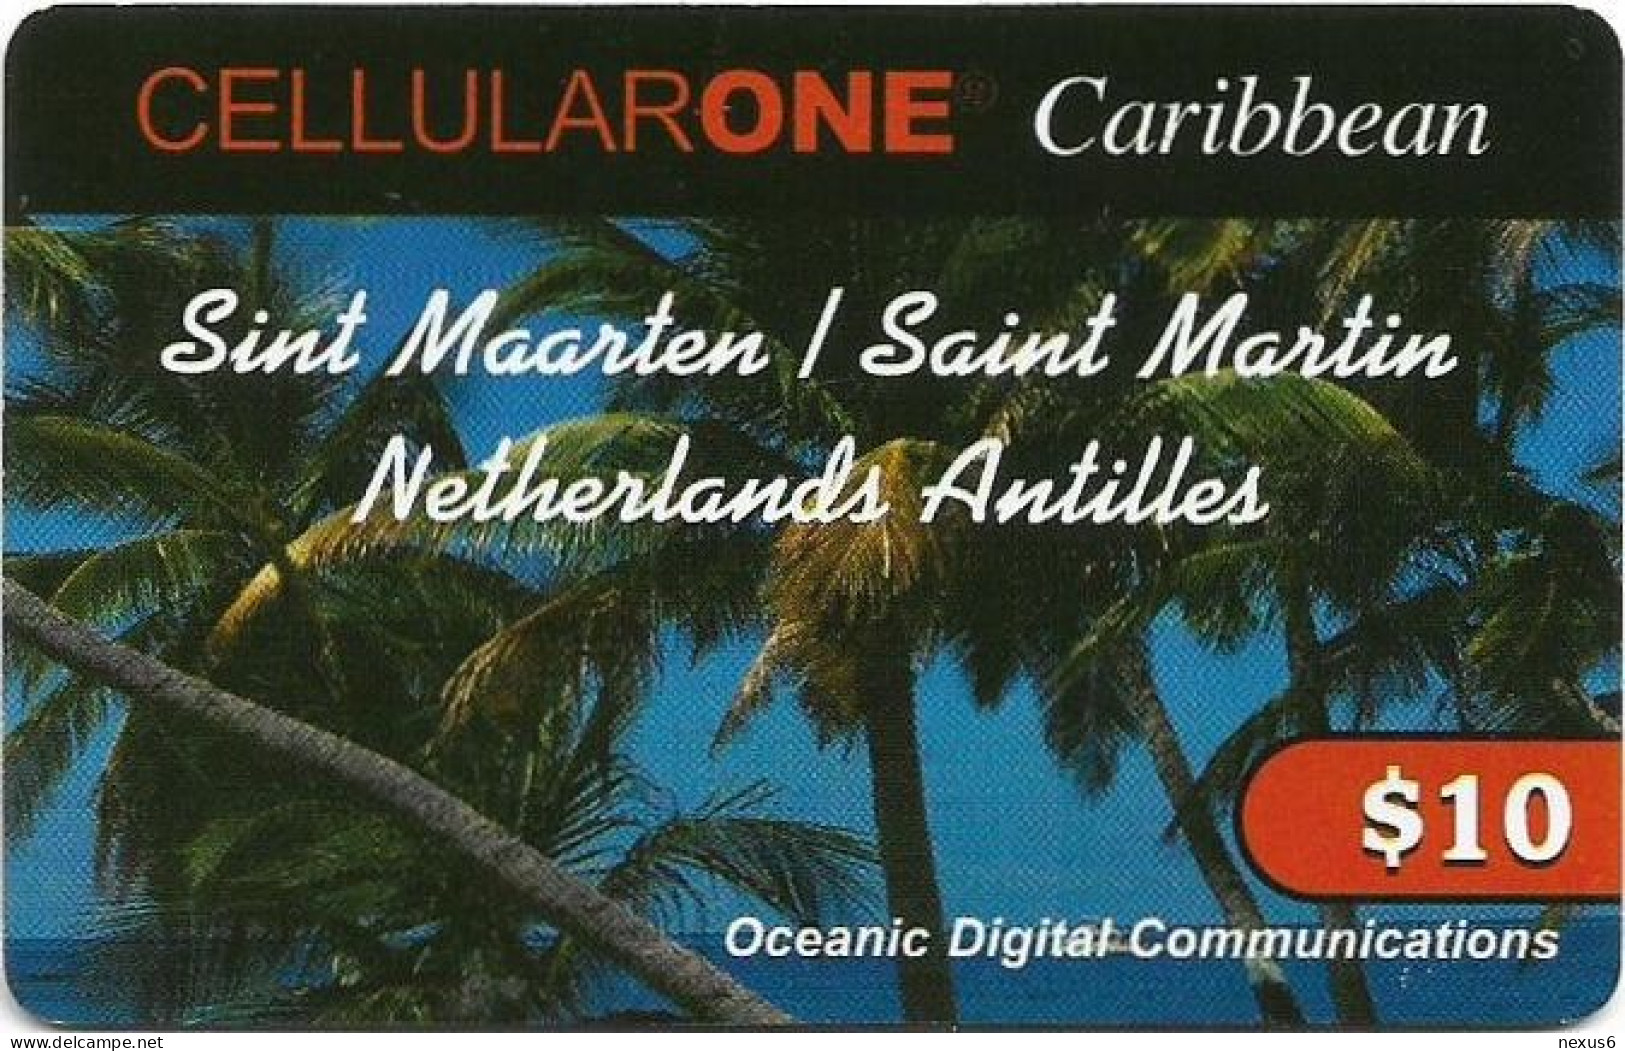 St. Maarten (Antilles Netherlands) - Cellular One Caribbean - Palm Trees (Type 2), Remote Mem. 10$, Used - Antille (Olandesi)